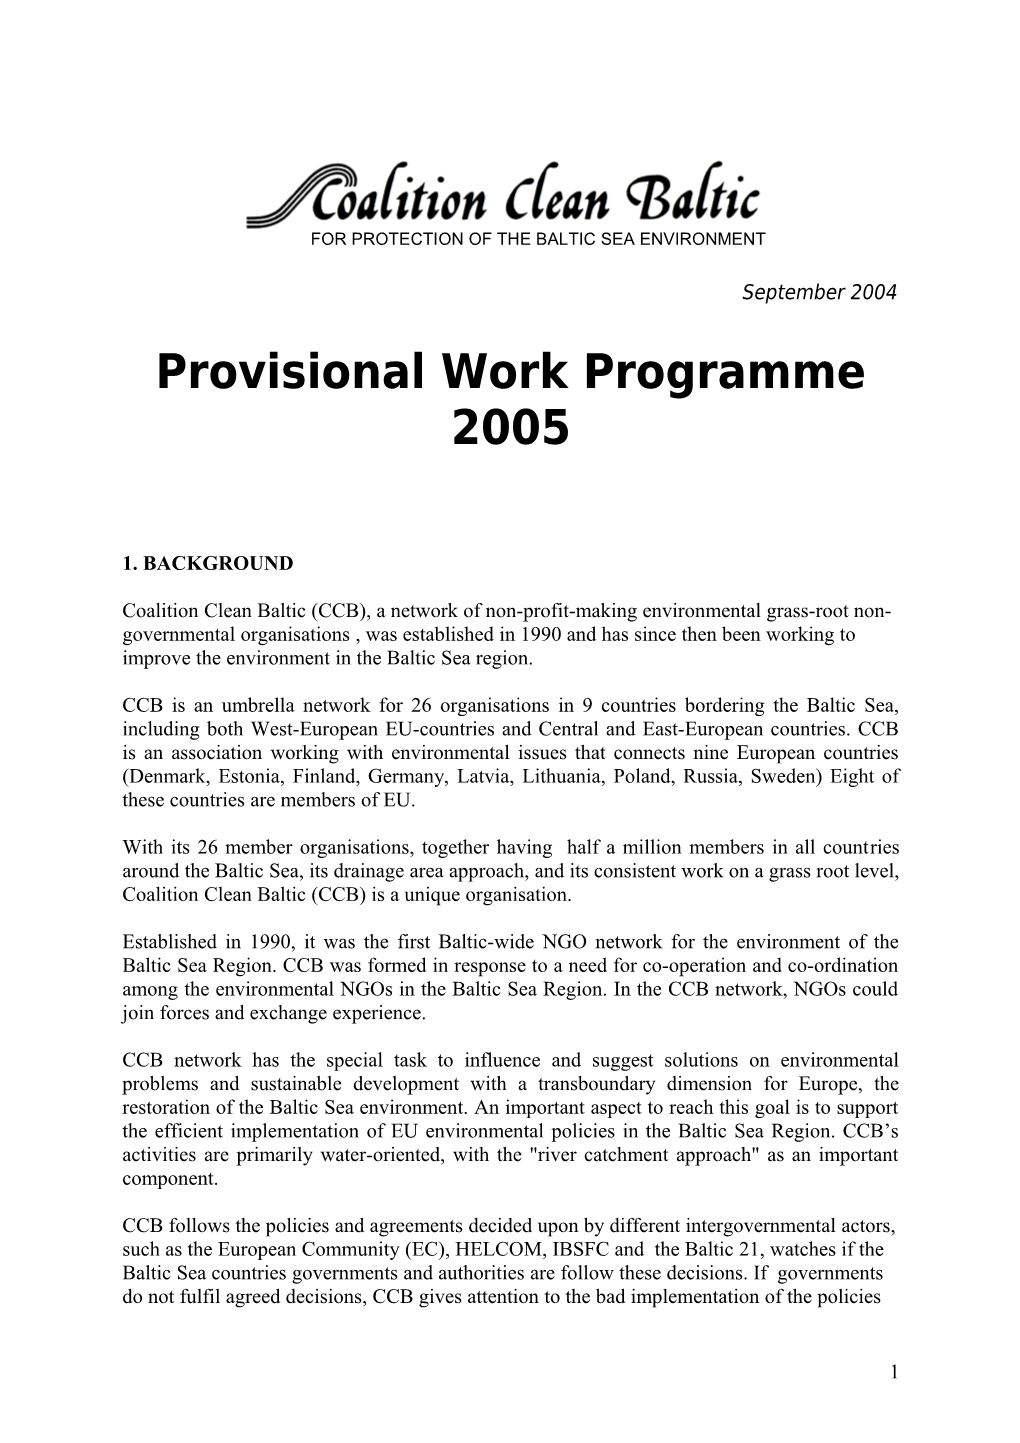 Provisional Work Programme 2005